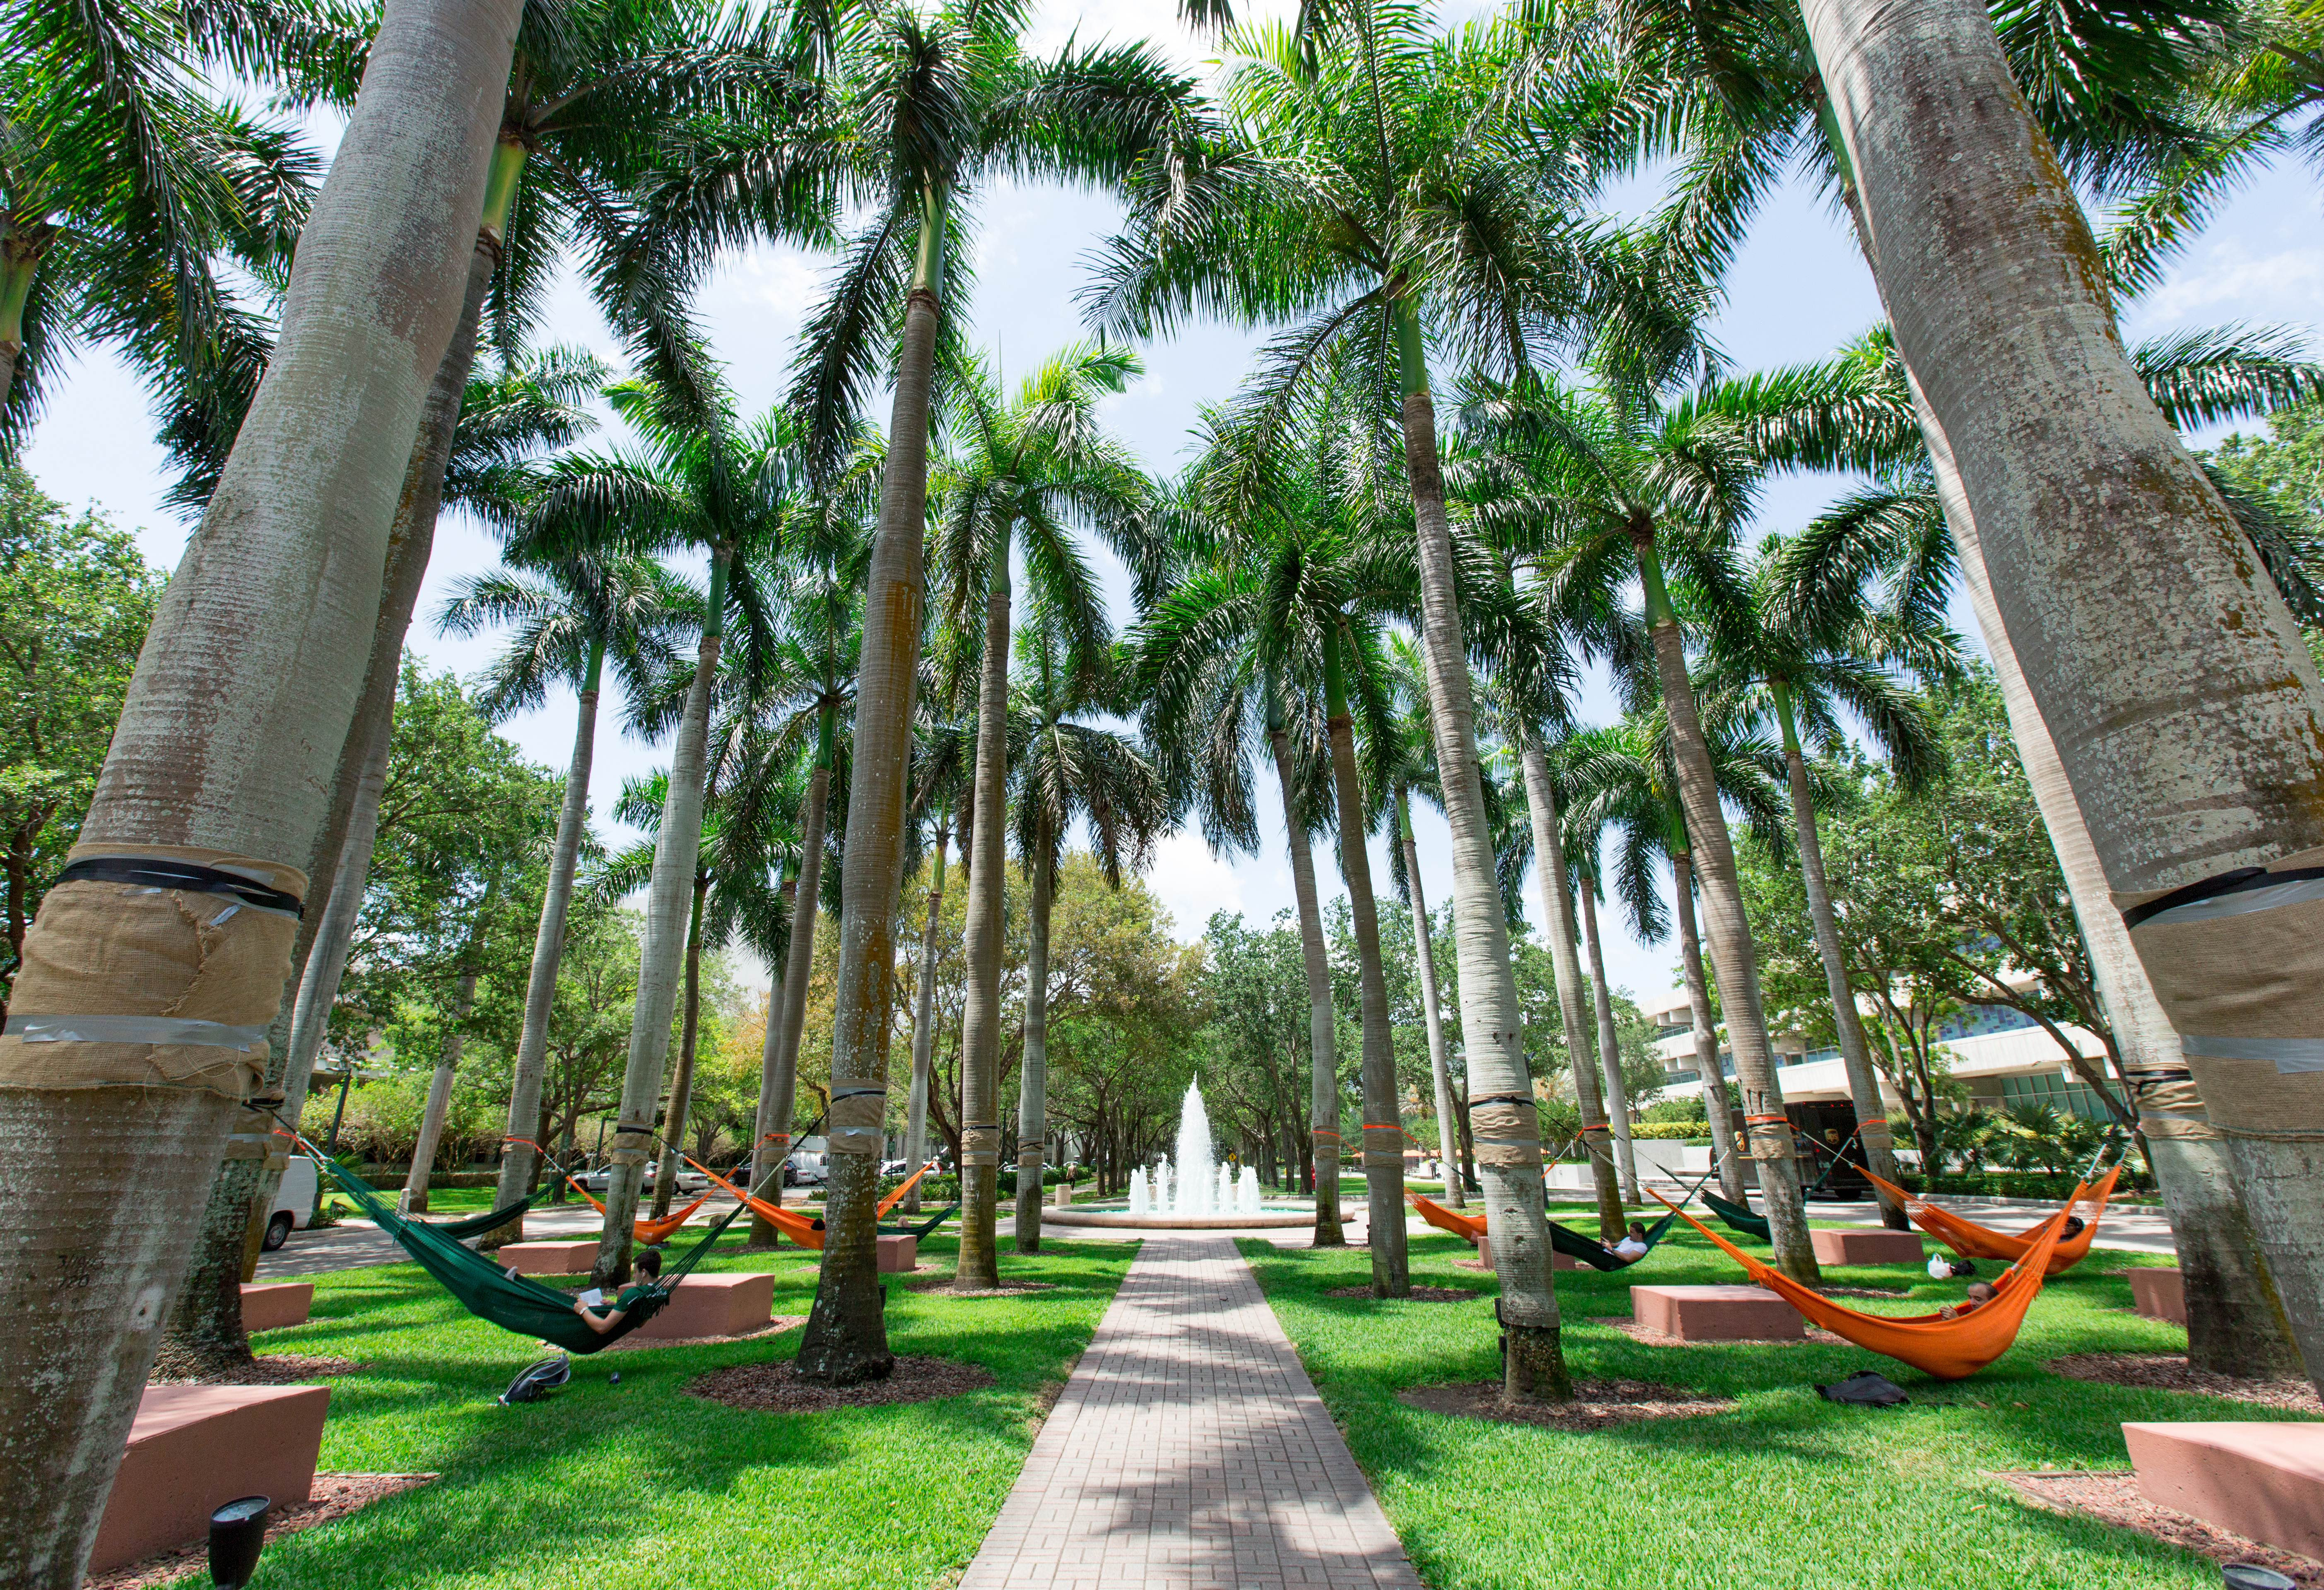 Students on green and orange hammocks on the University of Miami campus.